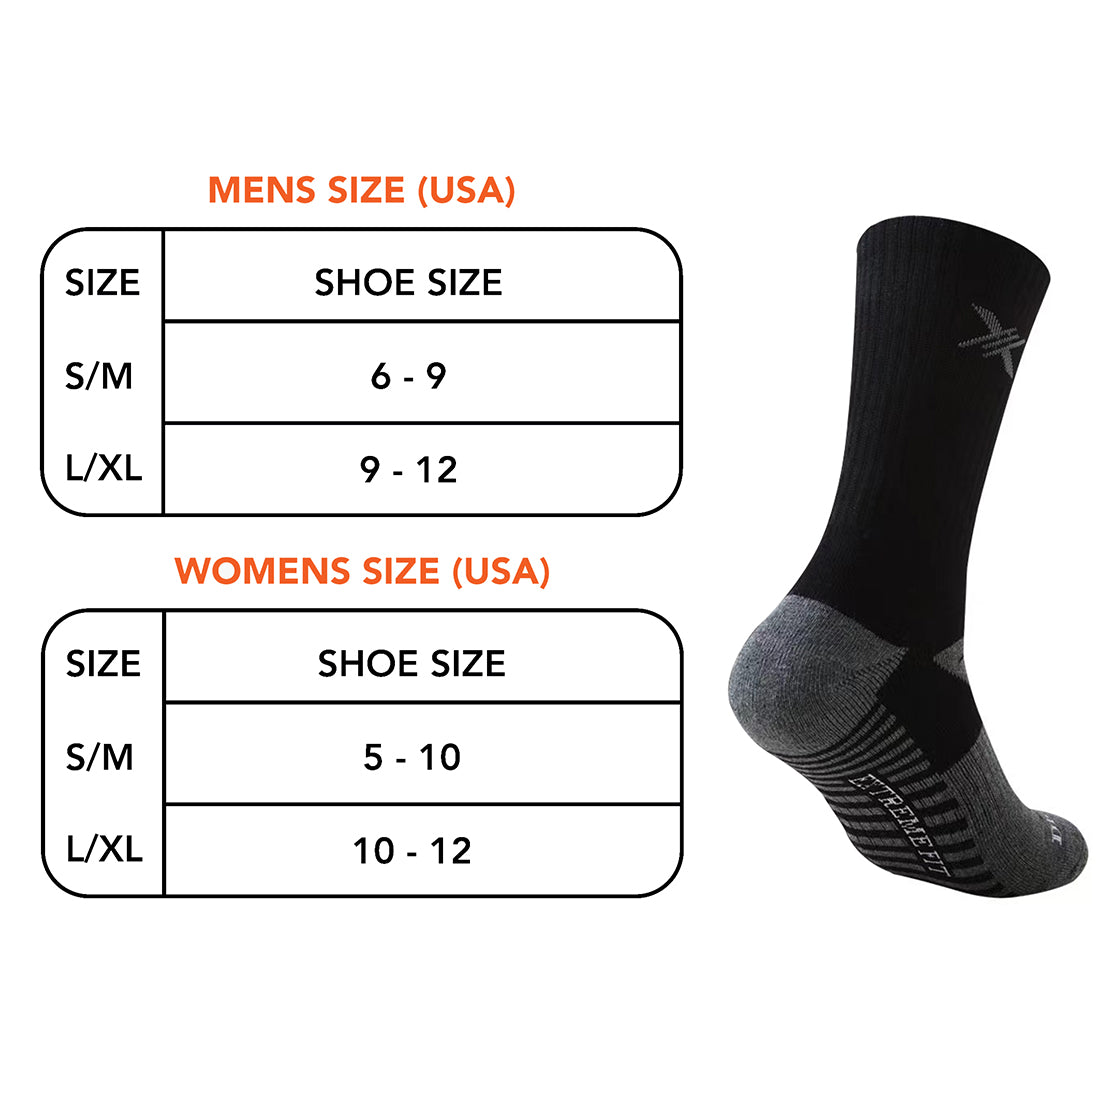 6-Pairs: Dri-tech Everyday Wear Crew Length Socks